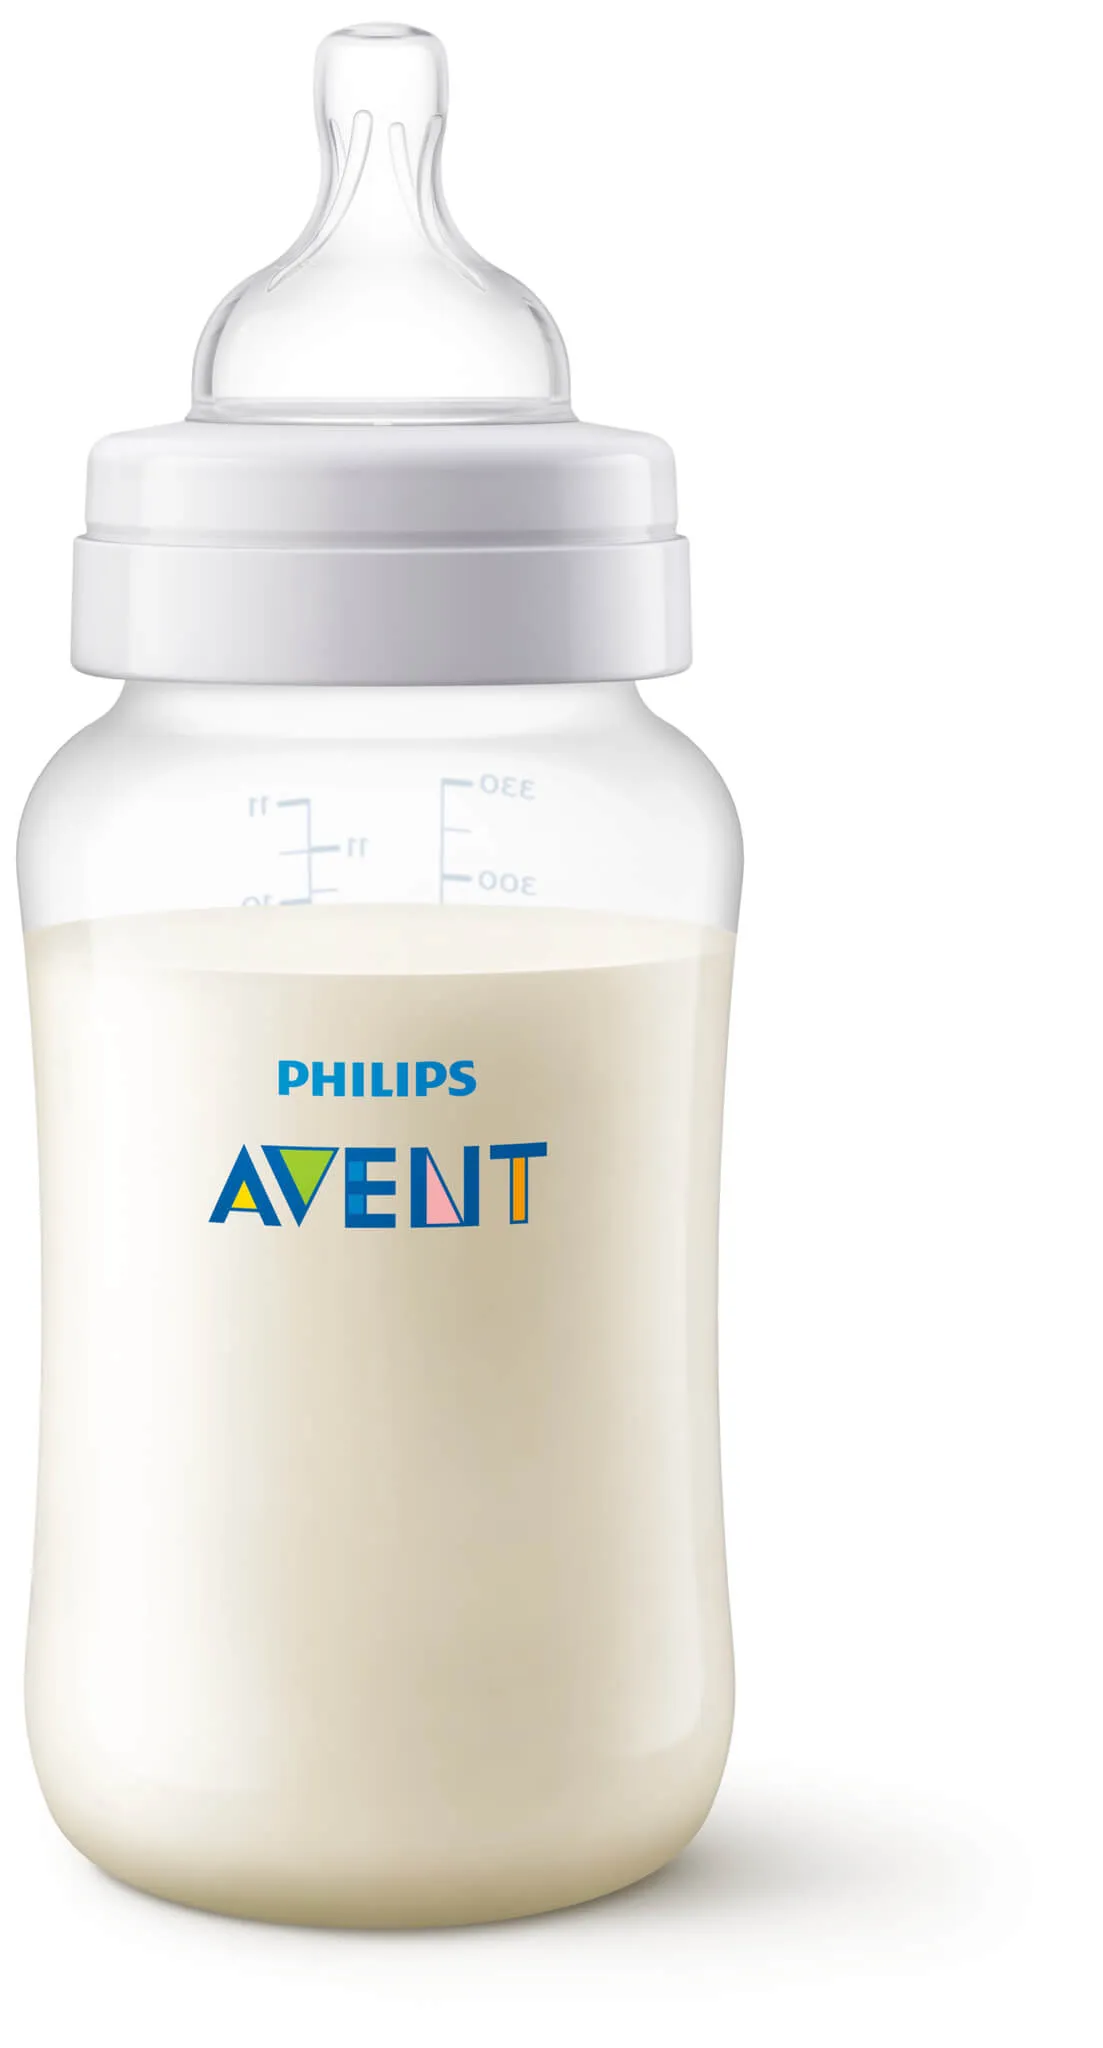 Avent Anti-colic, butelka antykolkowa 3m+ SCF816/17, 330 ml 